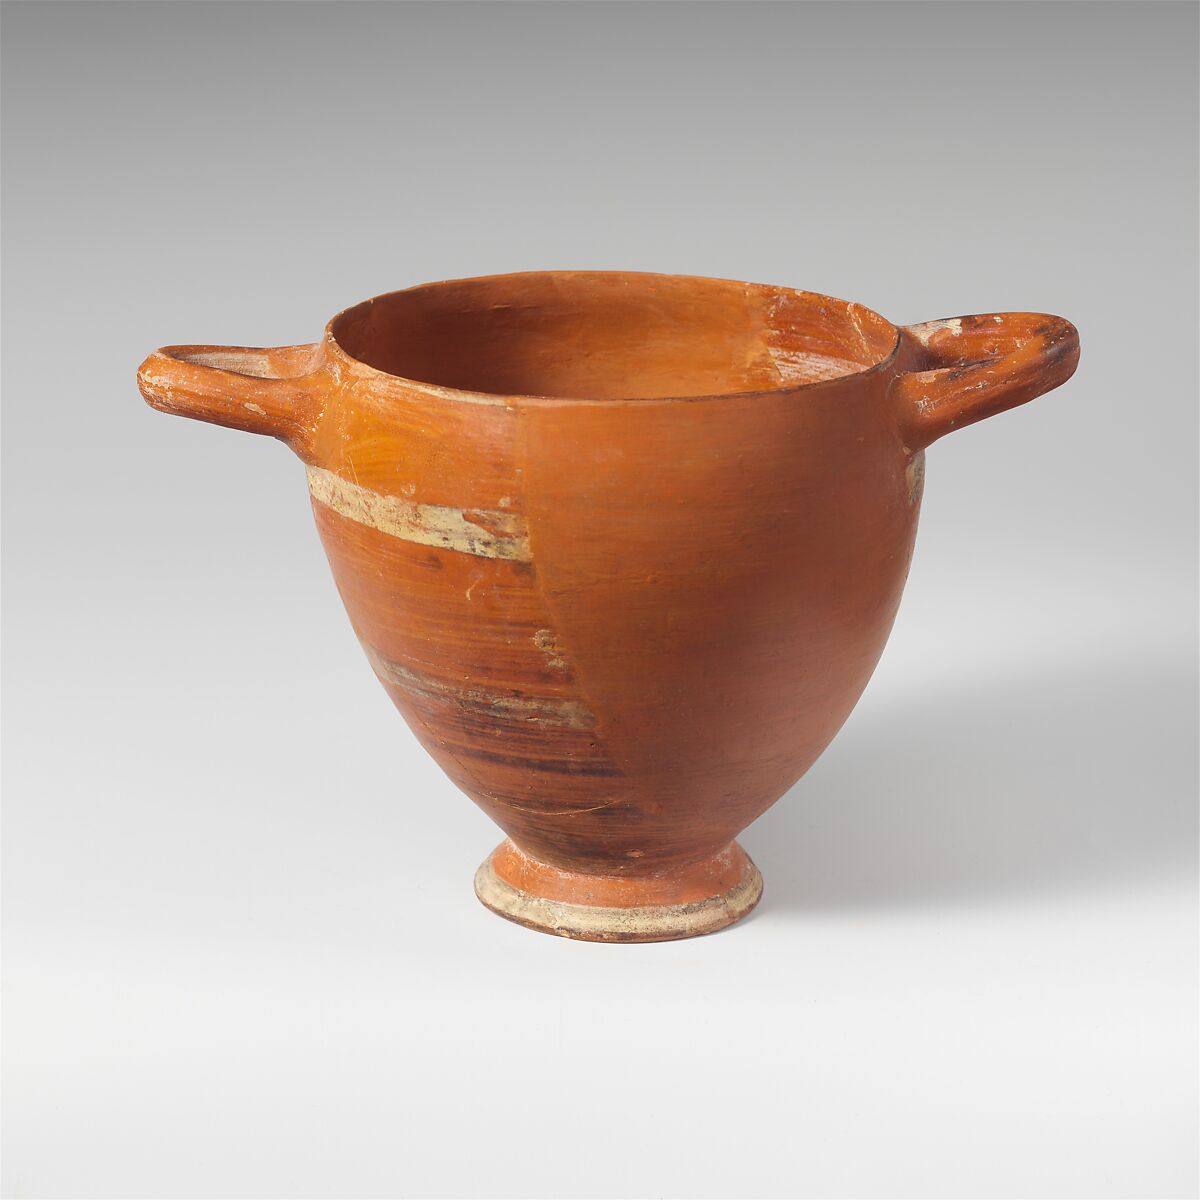 Terracotta skyphos (deep drinking cup), Terracotta, Lydian 